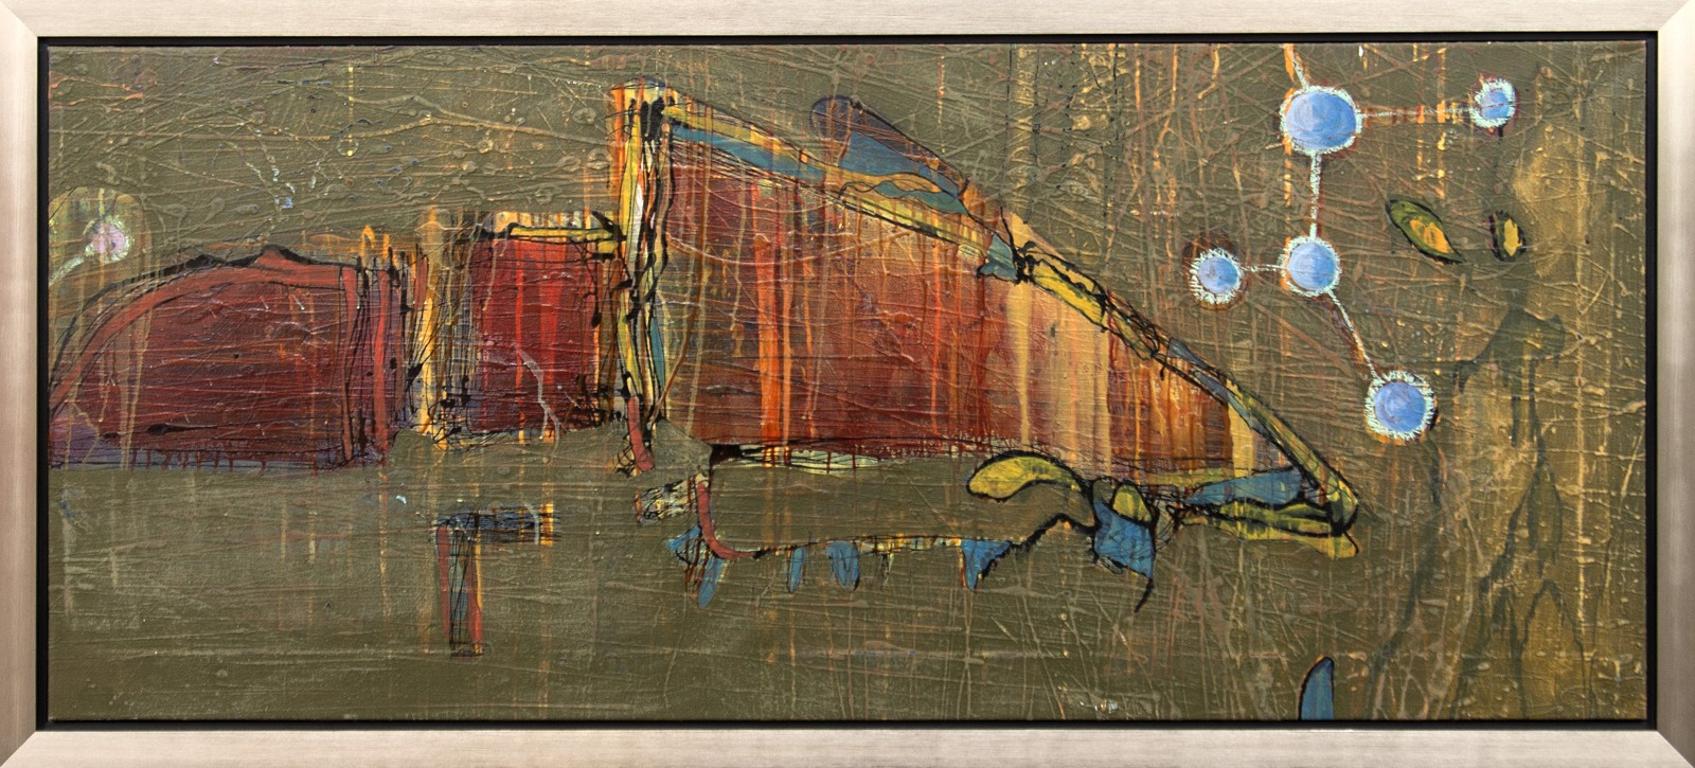 Viktor Mitic Abstract Painting – Markierung Nr. 9 - kühn, farbenfroh, gestisch, ausdrucksstark, abstrakt, Öl auf Leinwand